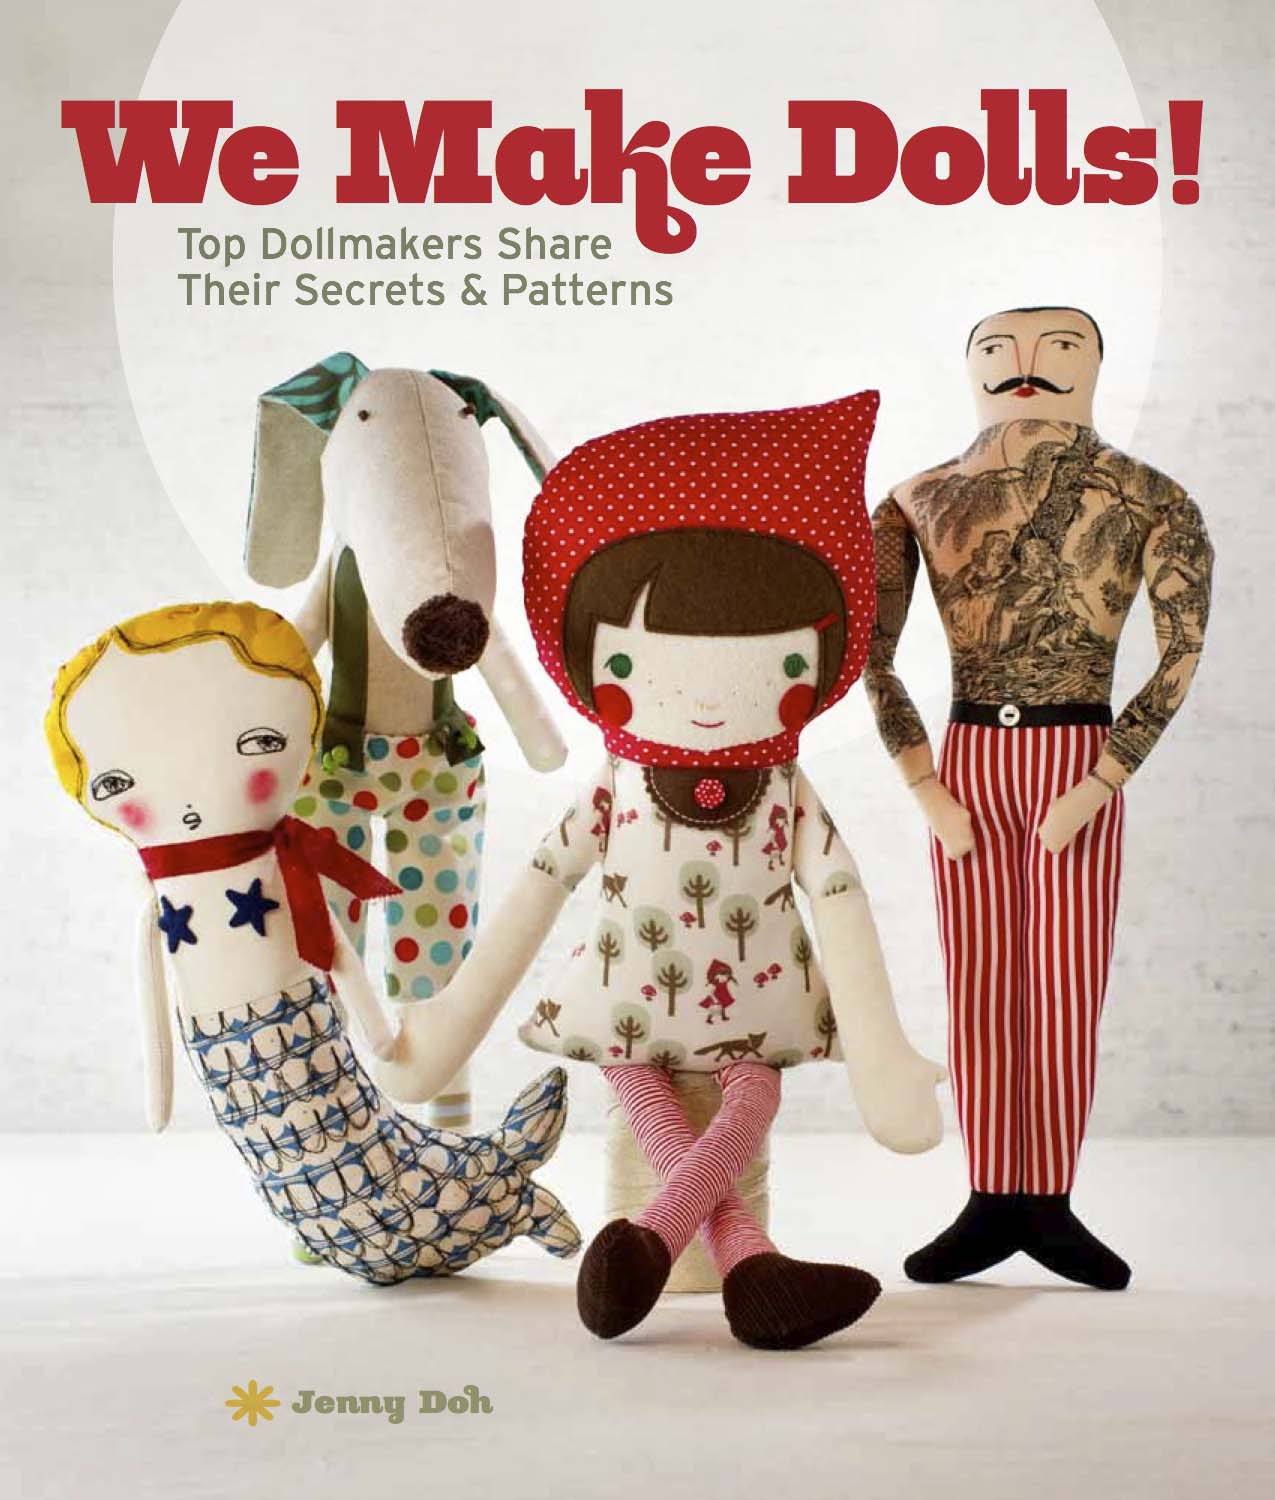 We make dolls